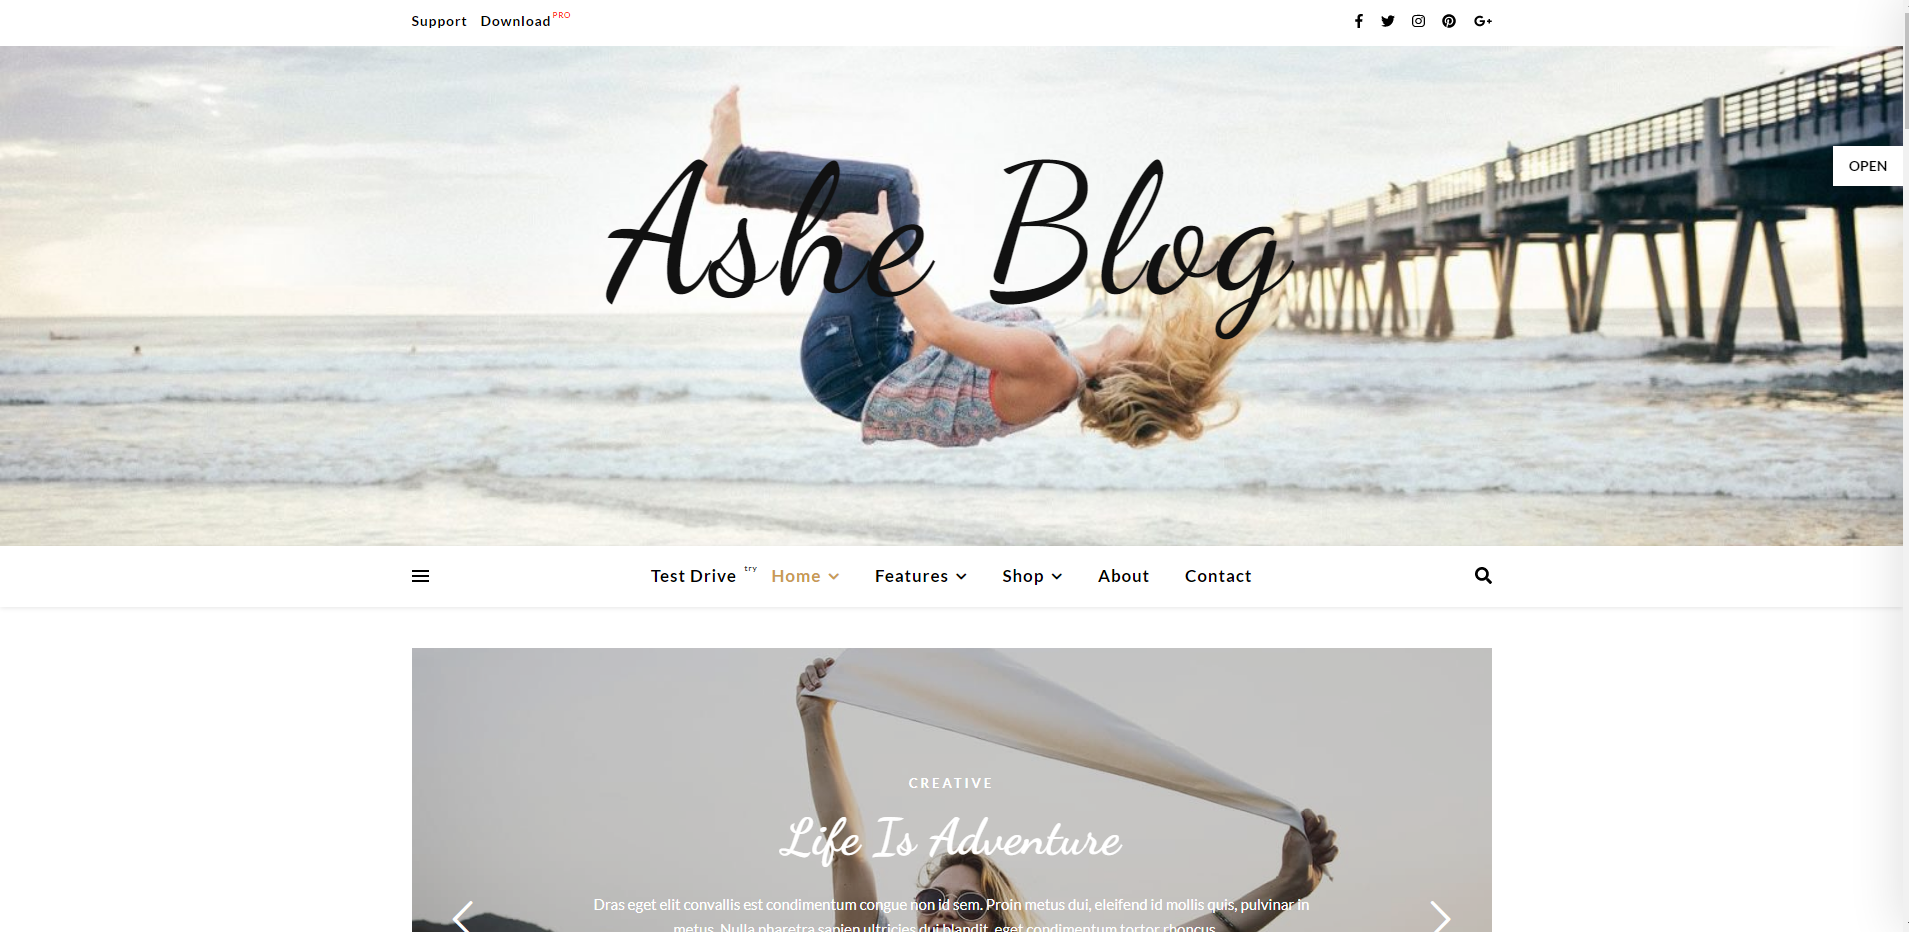 Ashe Blog - free WordPress blog themes